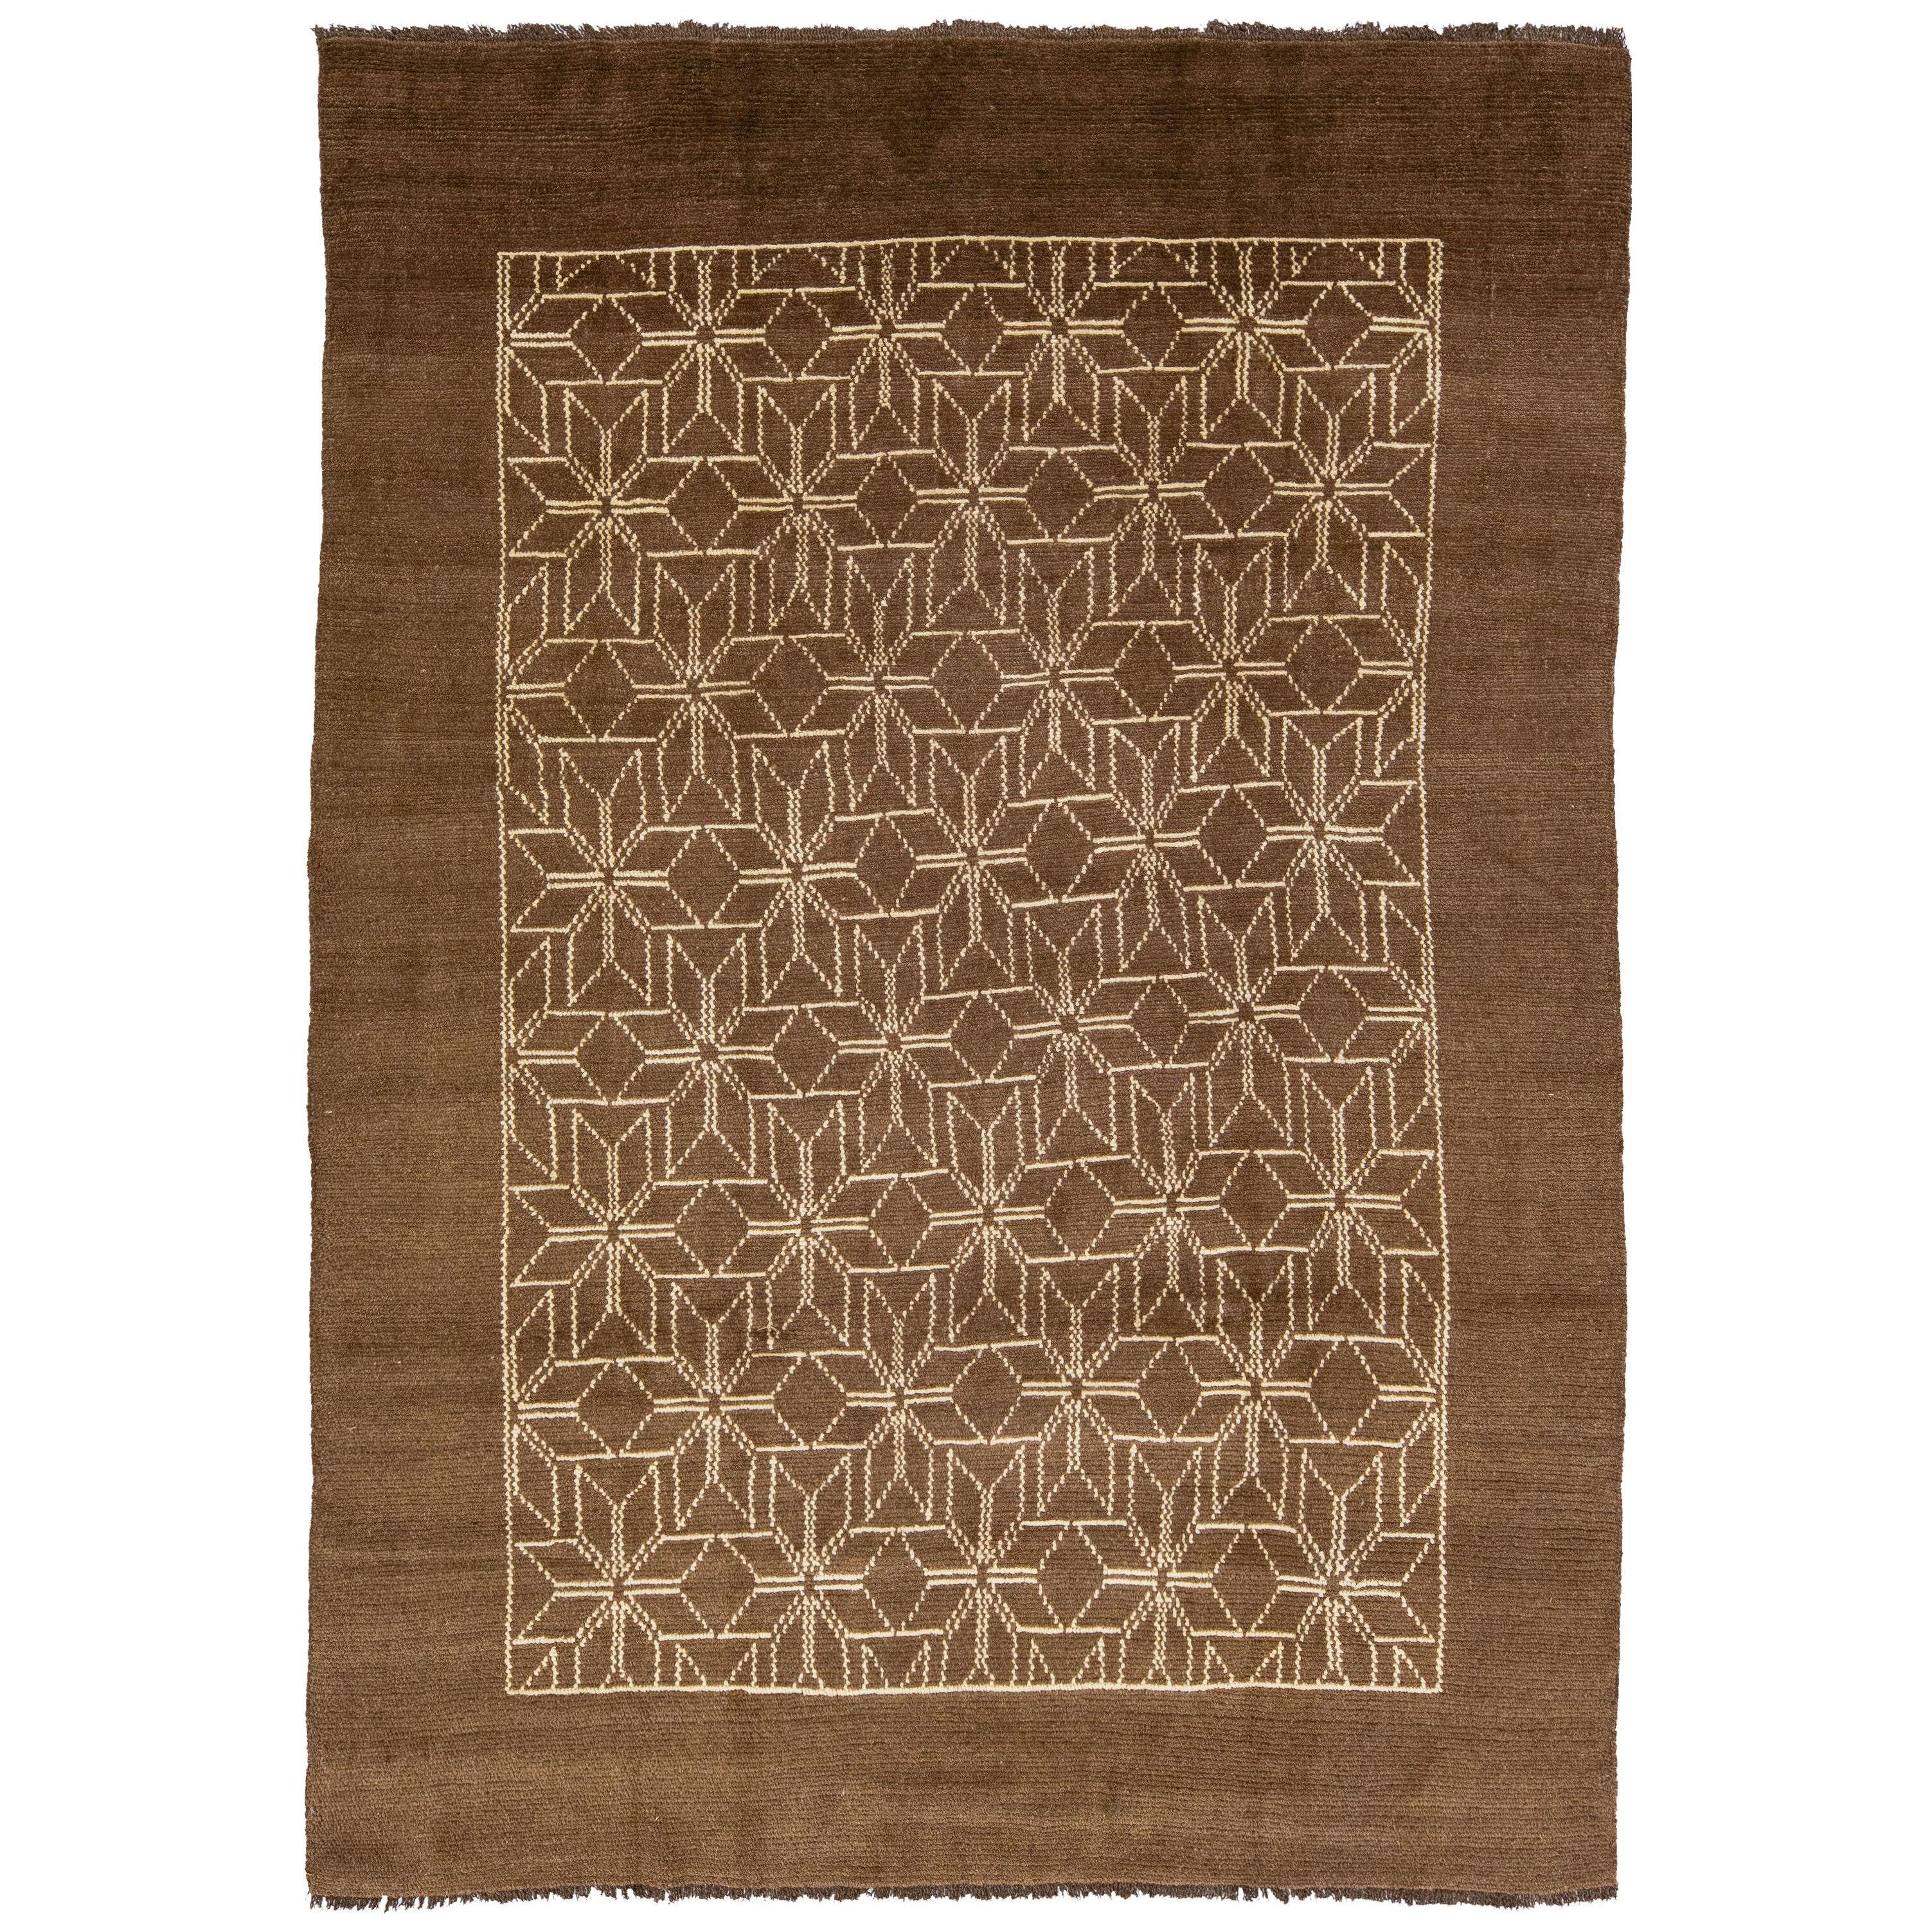 Modern Tribal Style Handmade Brown Designed Wool Rug by Apadana